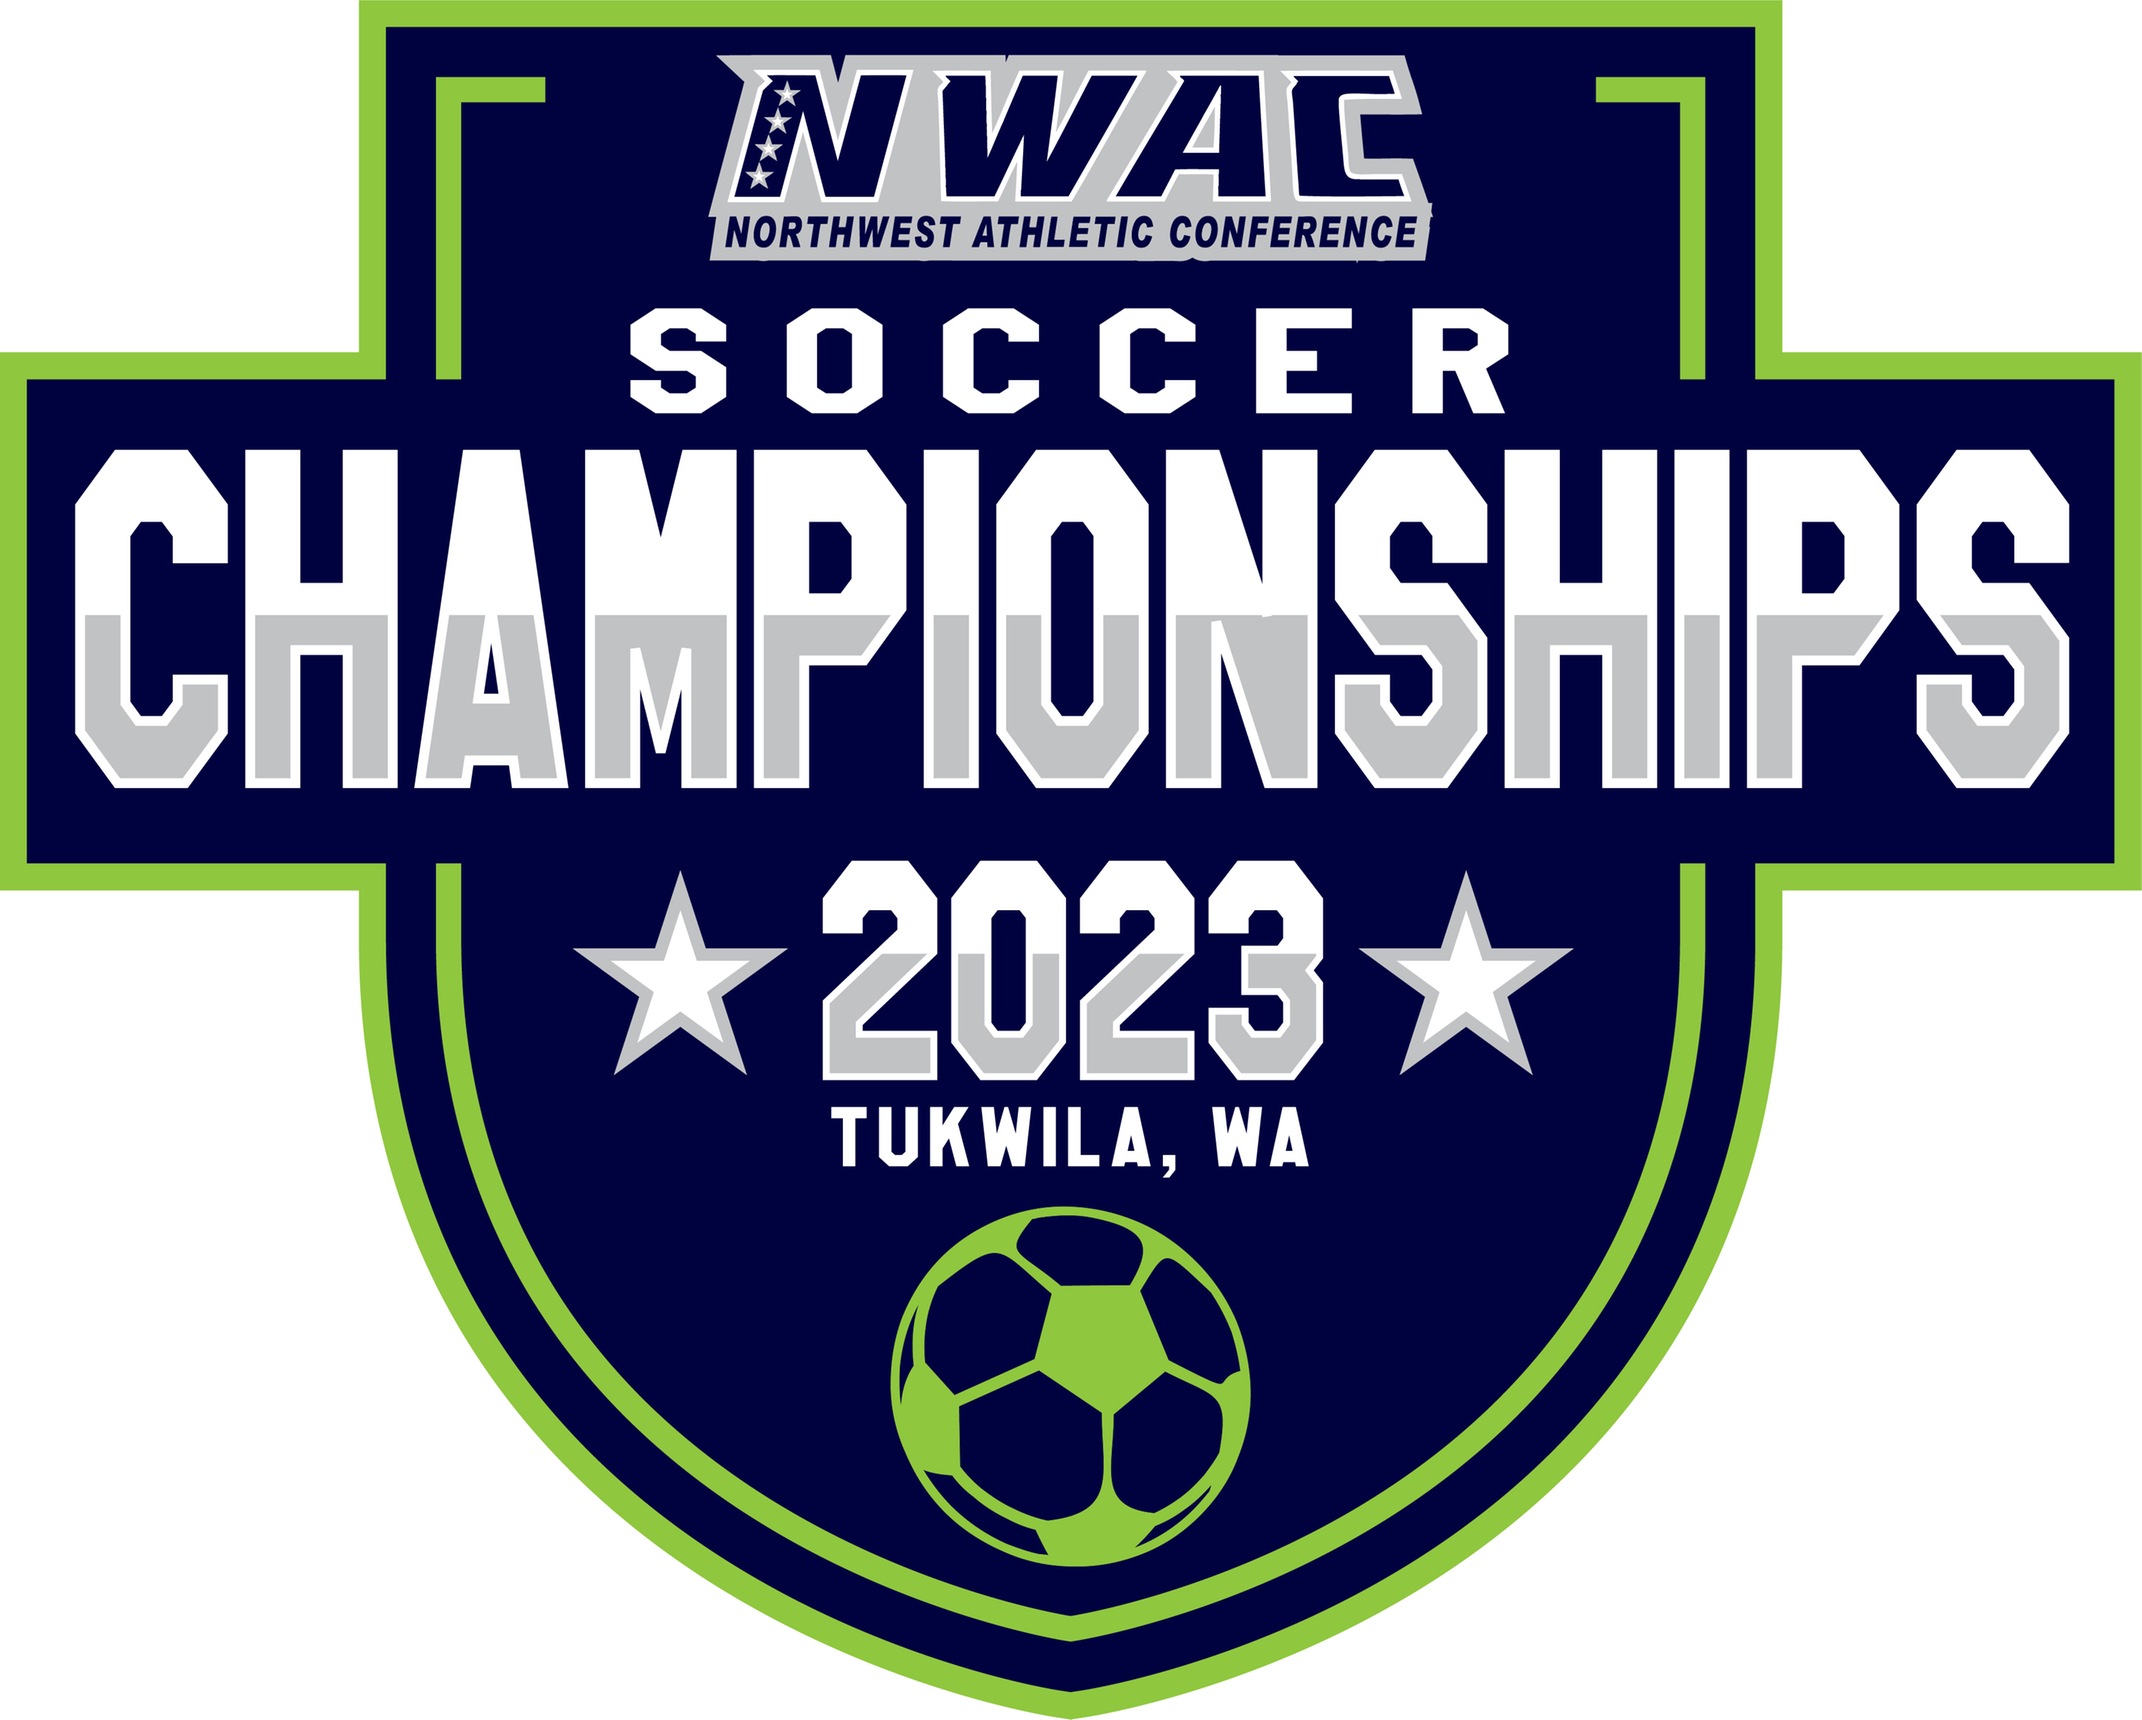 2023 NWAC Soccer Championships logo